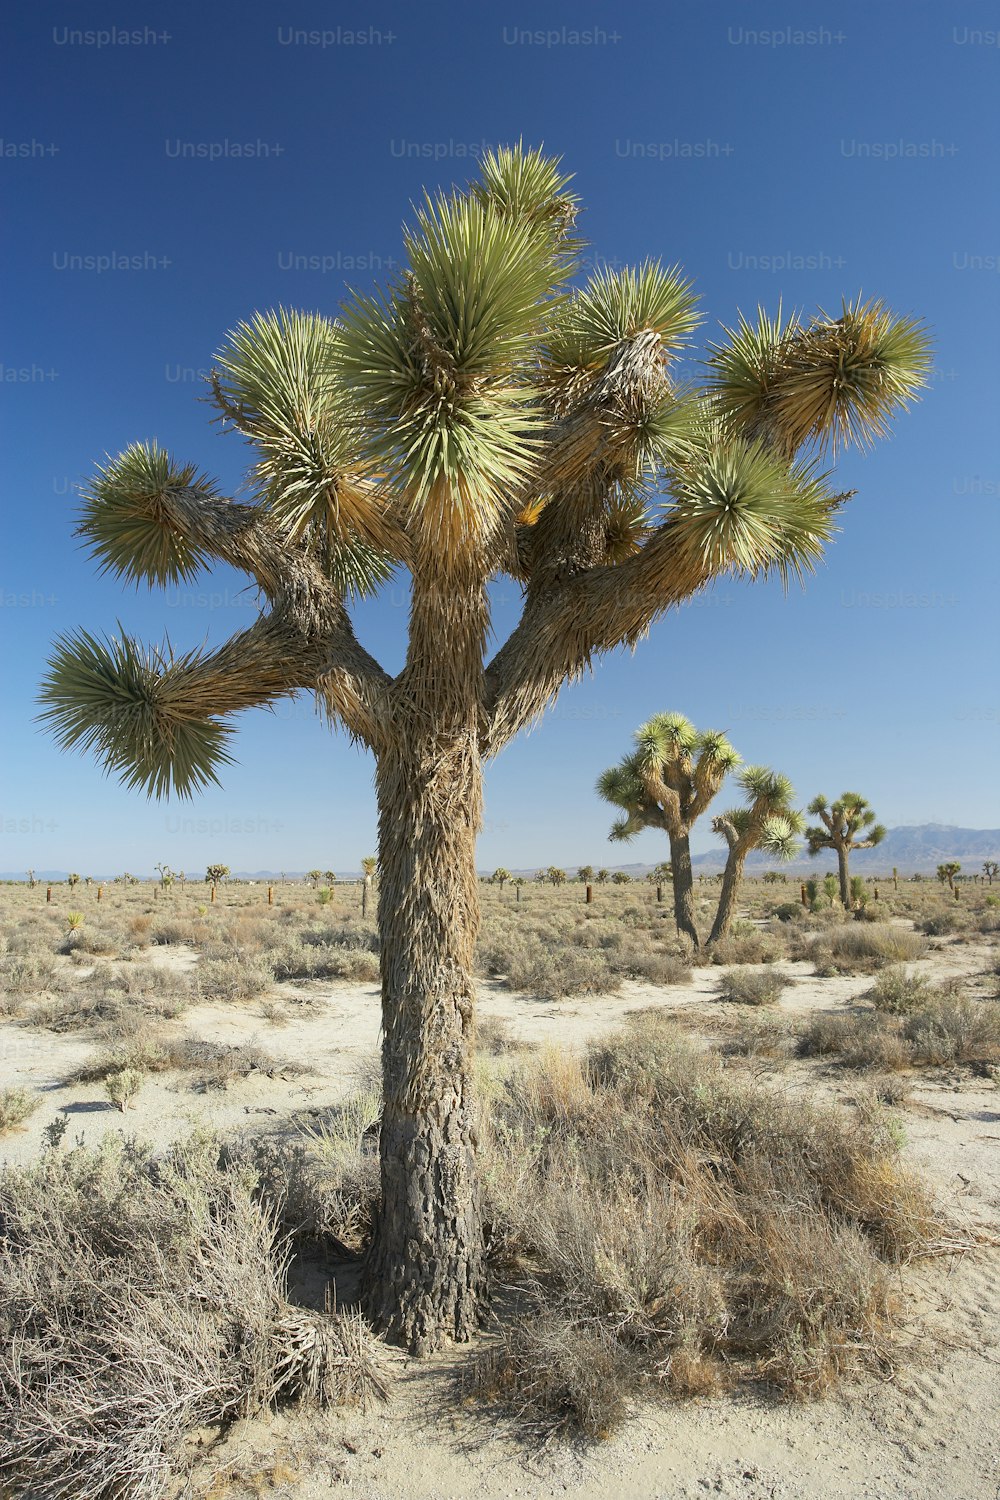 Un árbol de Josué en medio de un desierto